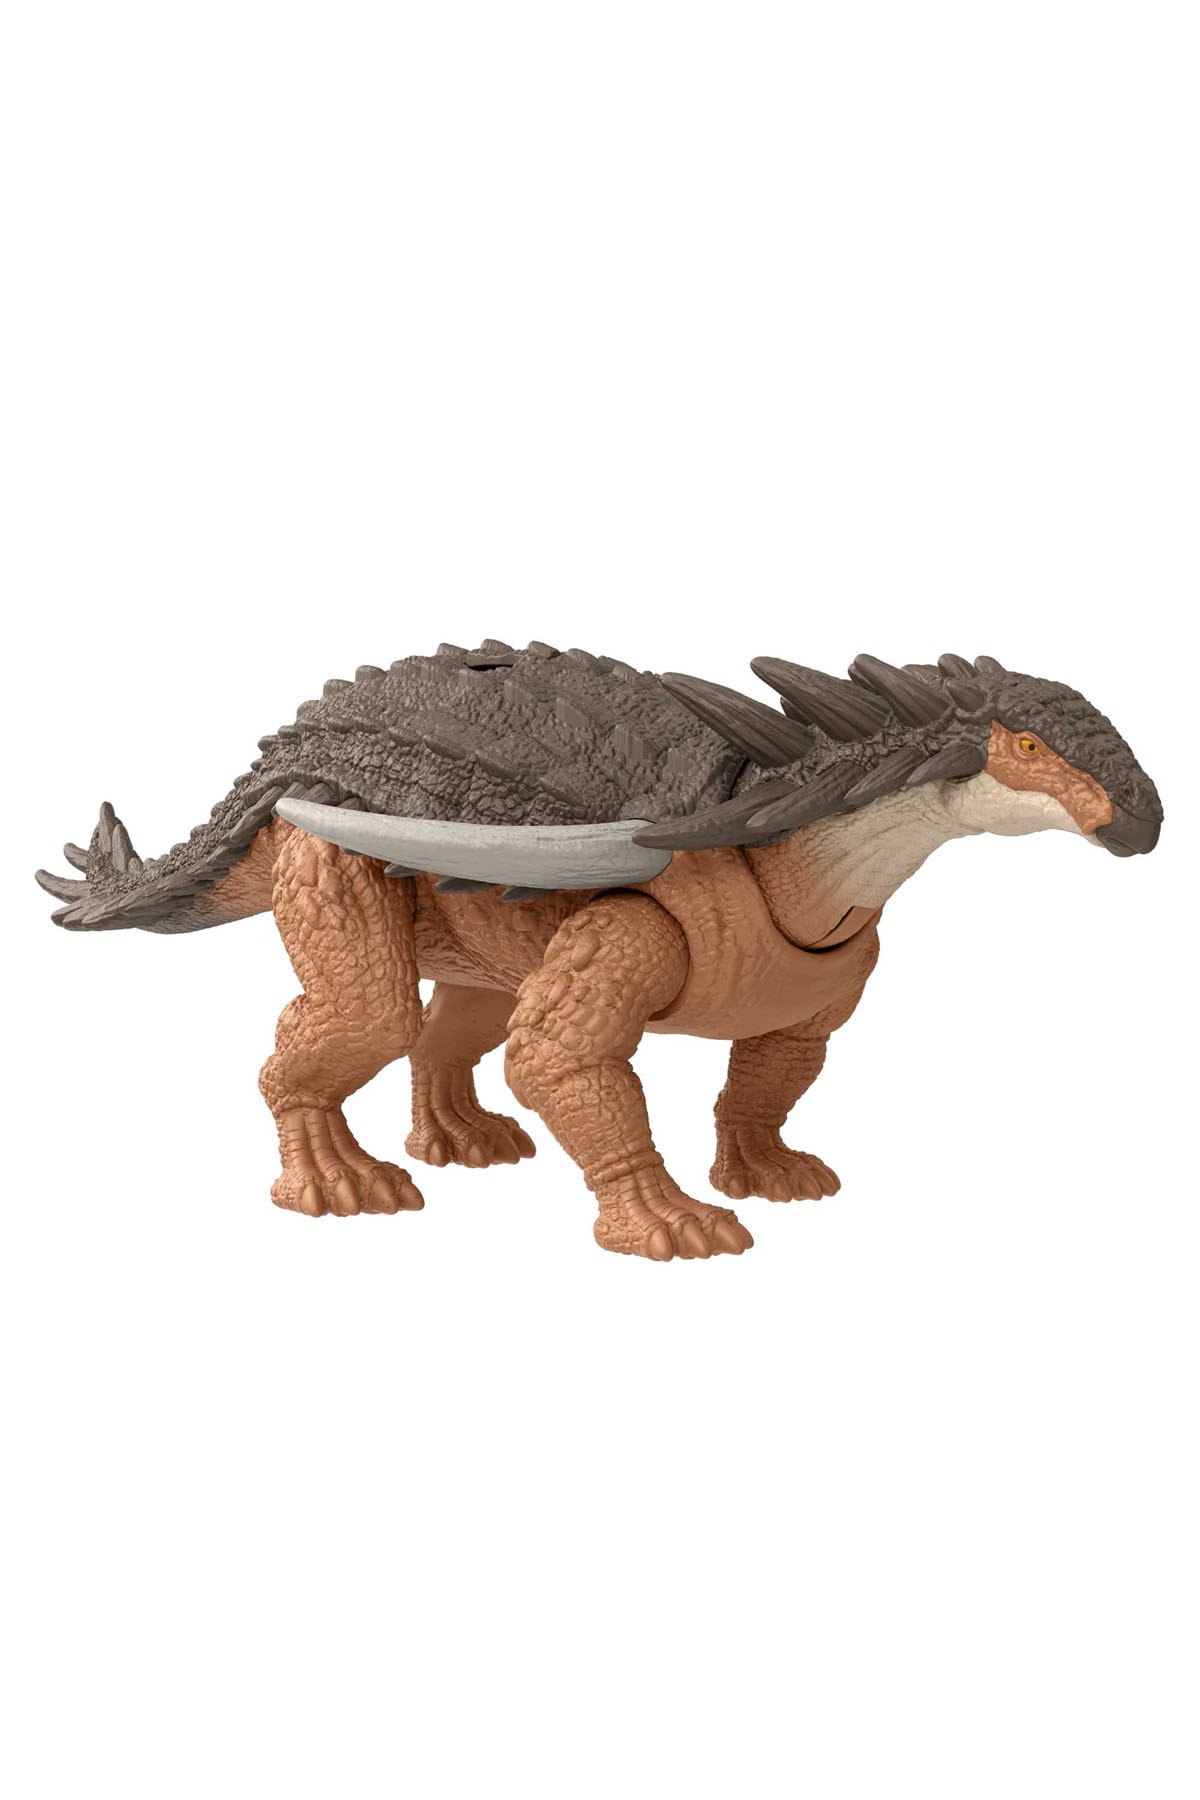 Jurassic World Tehlikeli Dinozor Paketi HLN58